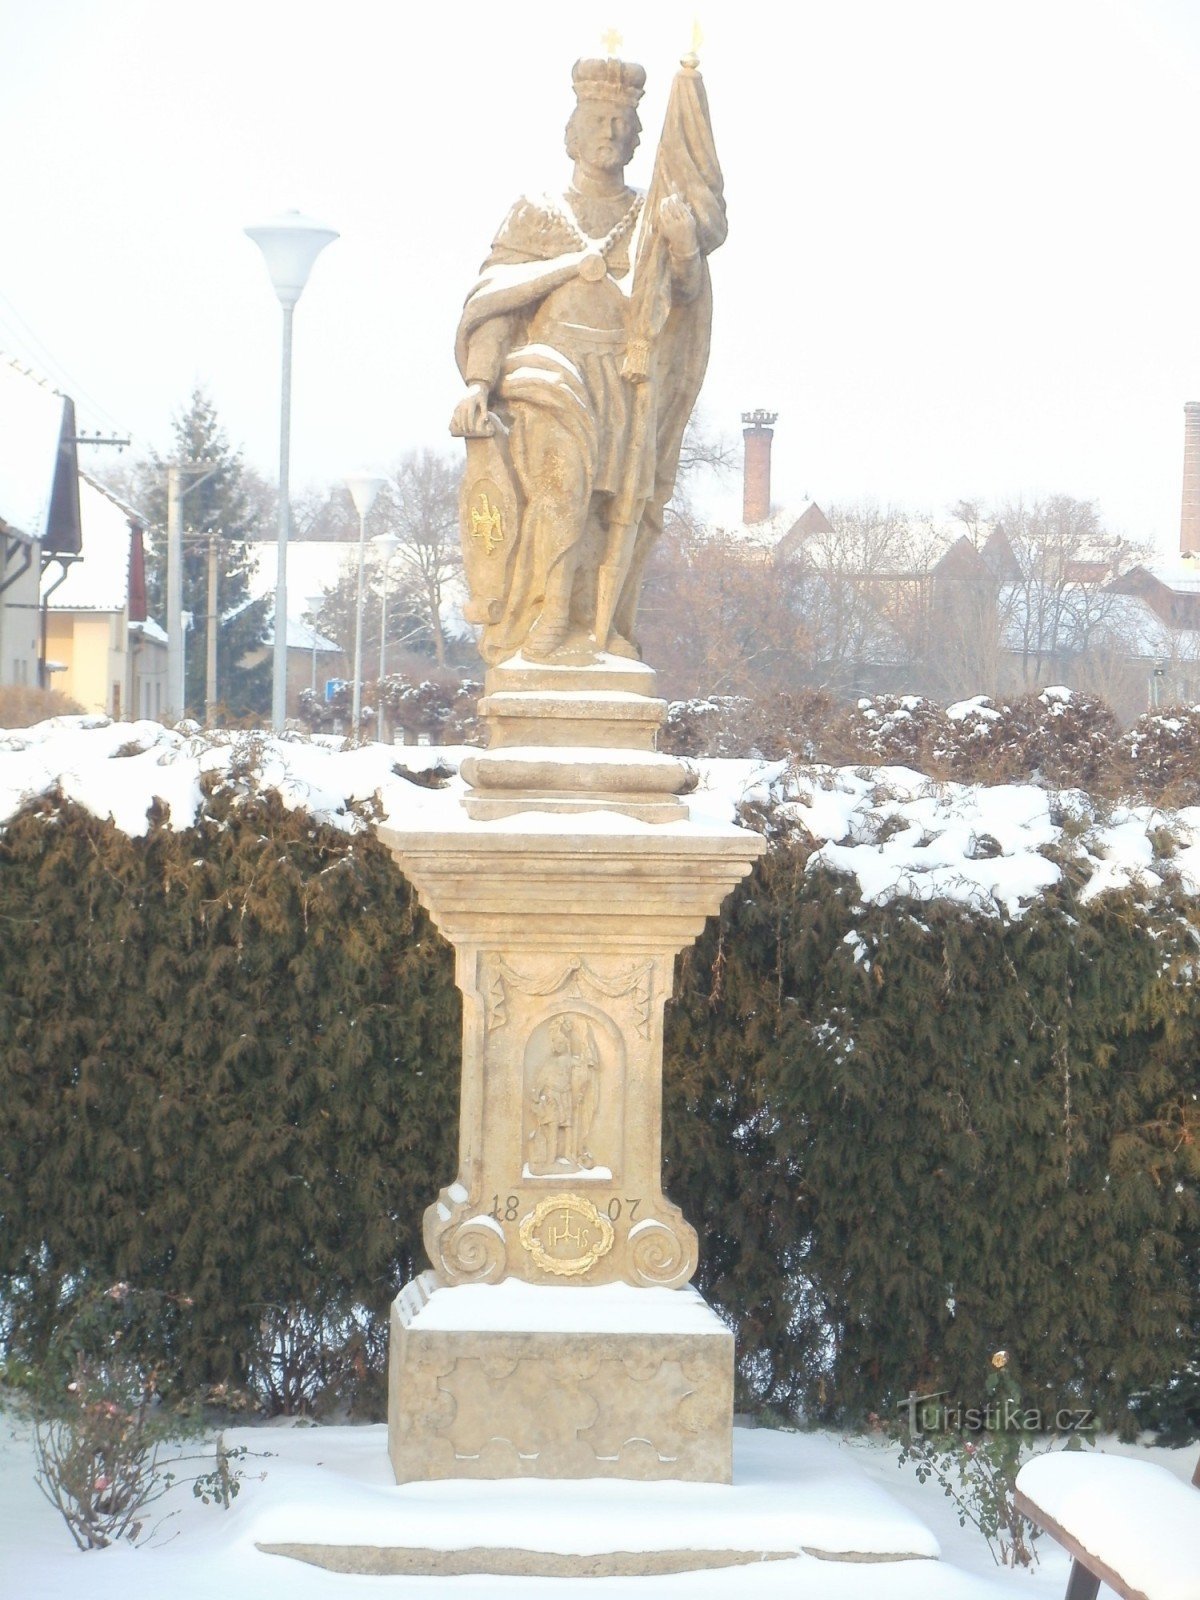 Chlumec nad Cidlinou - muistomerkki, jossa on patsas St. Wenceslas